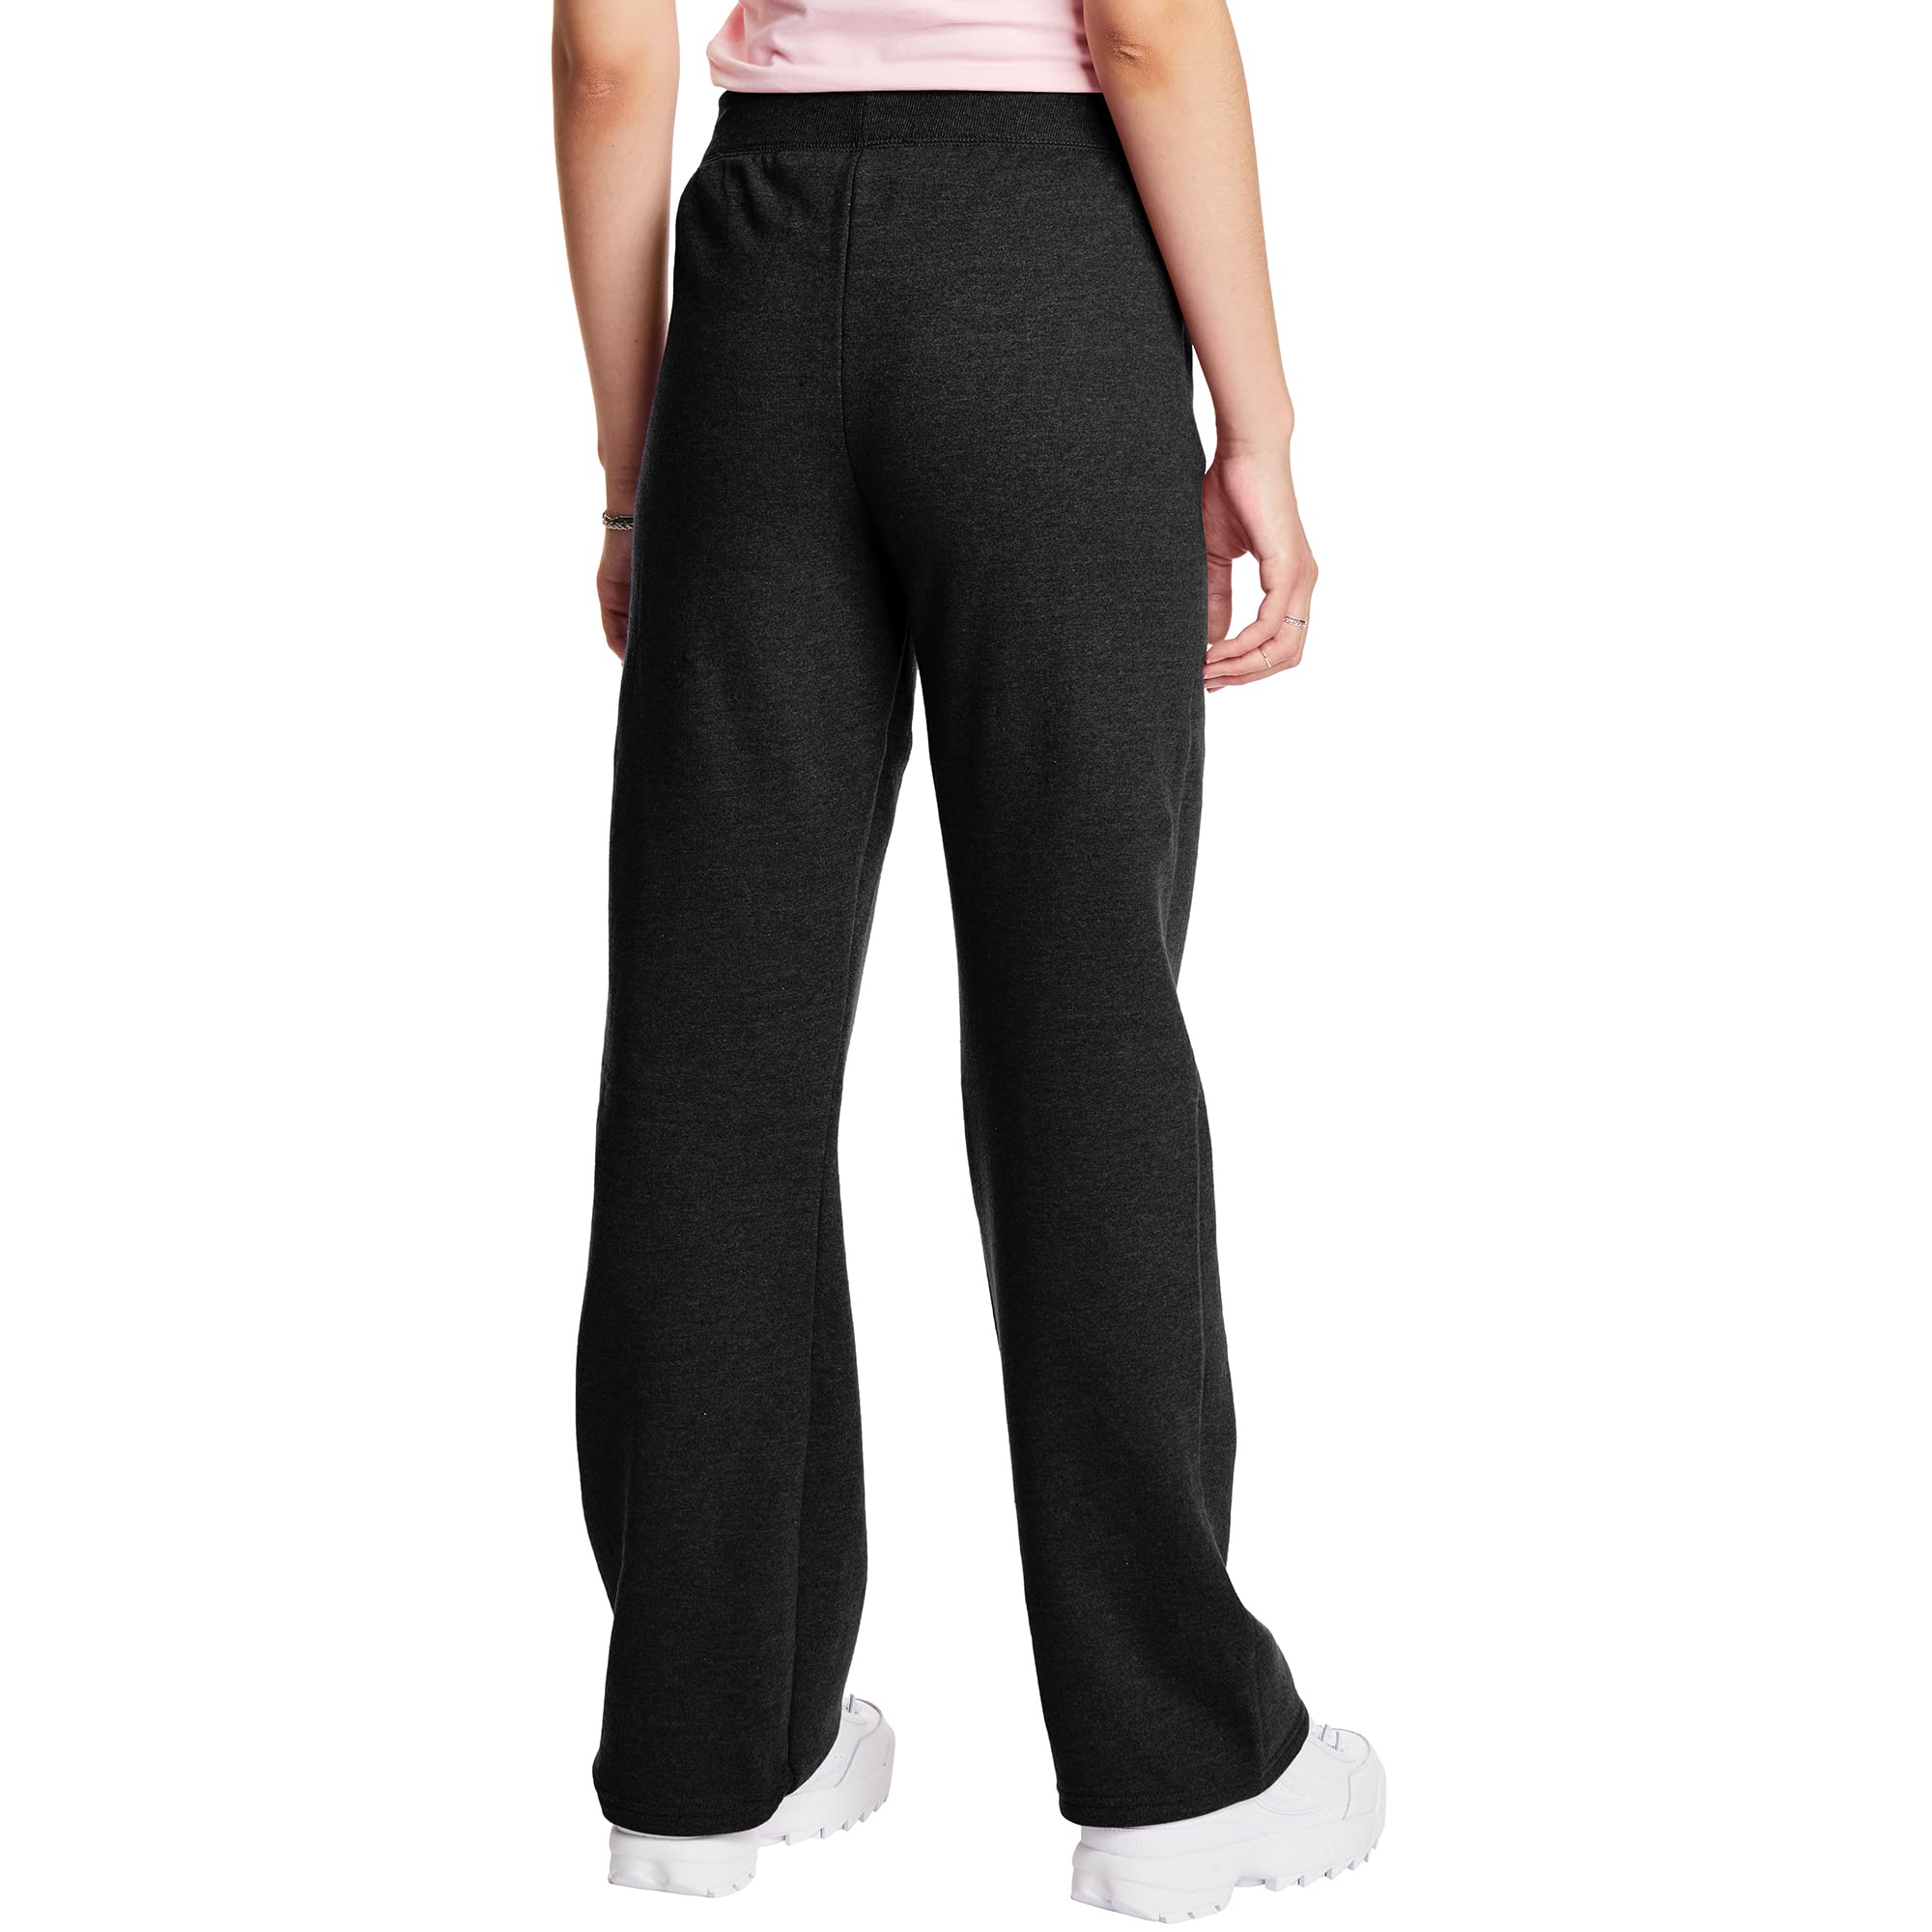 Hanes Women’s EcoSmart Fleece Petite Sweatpants, Open Bottom Sweatpants, Petite, 28.5''